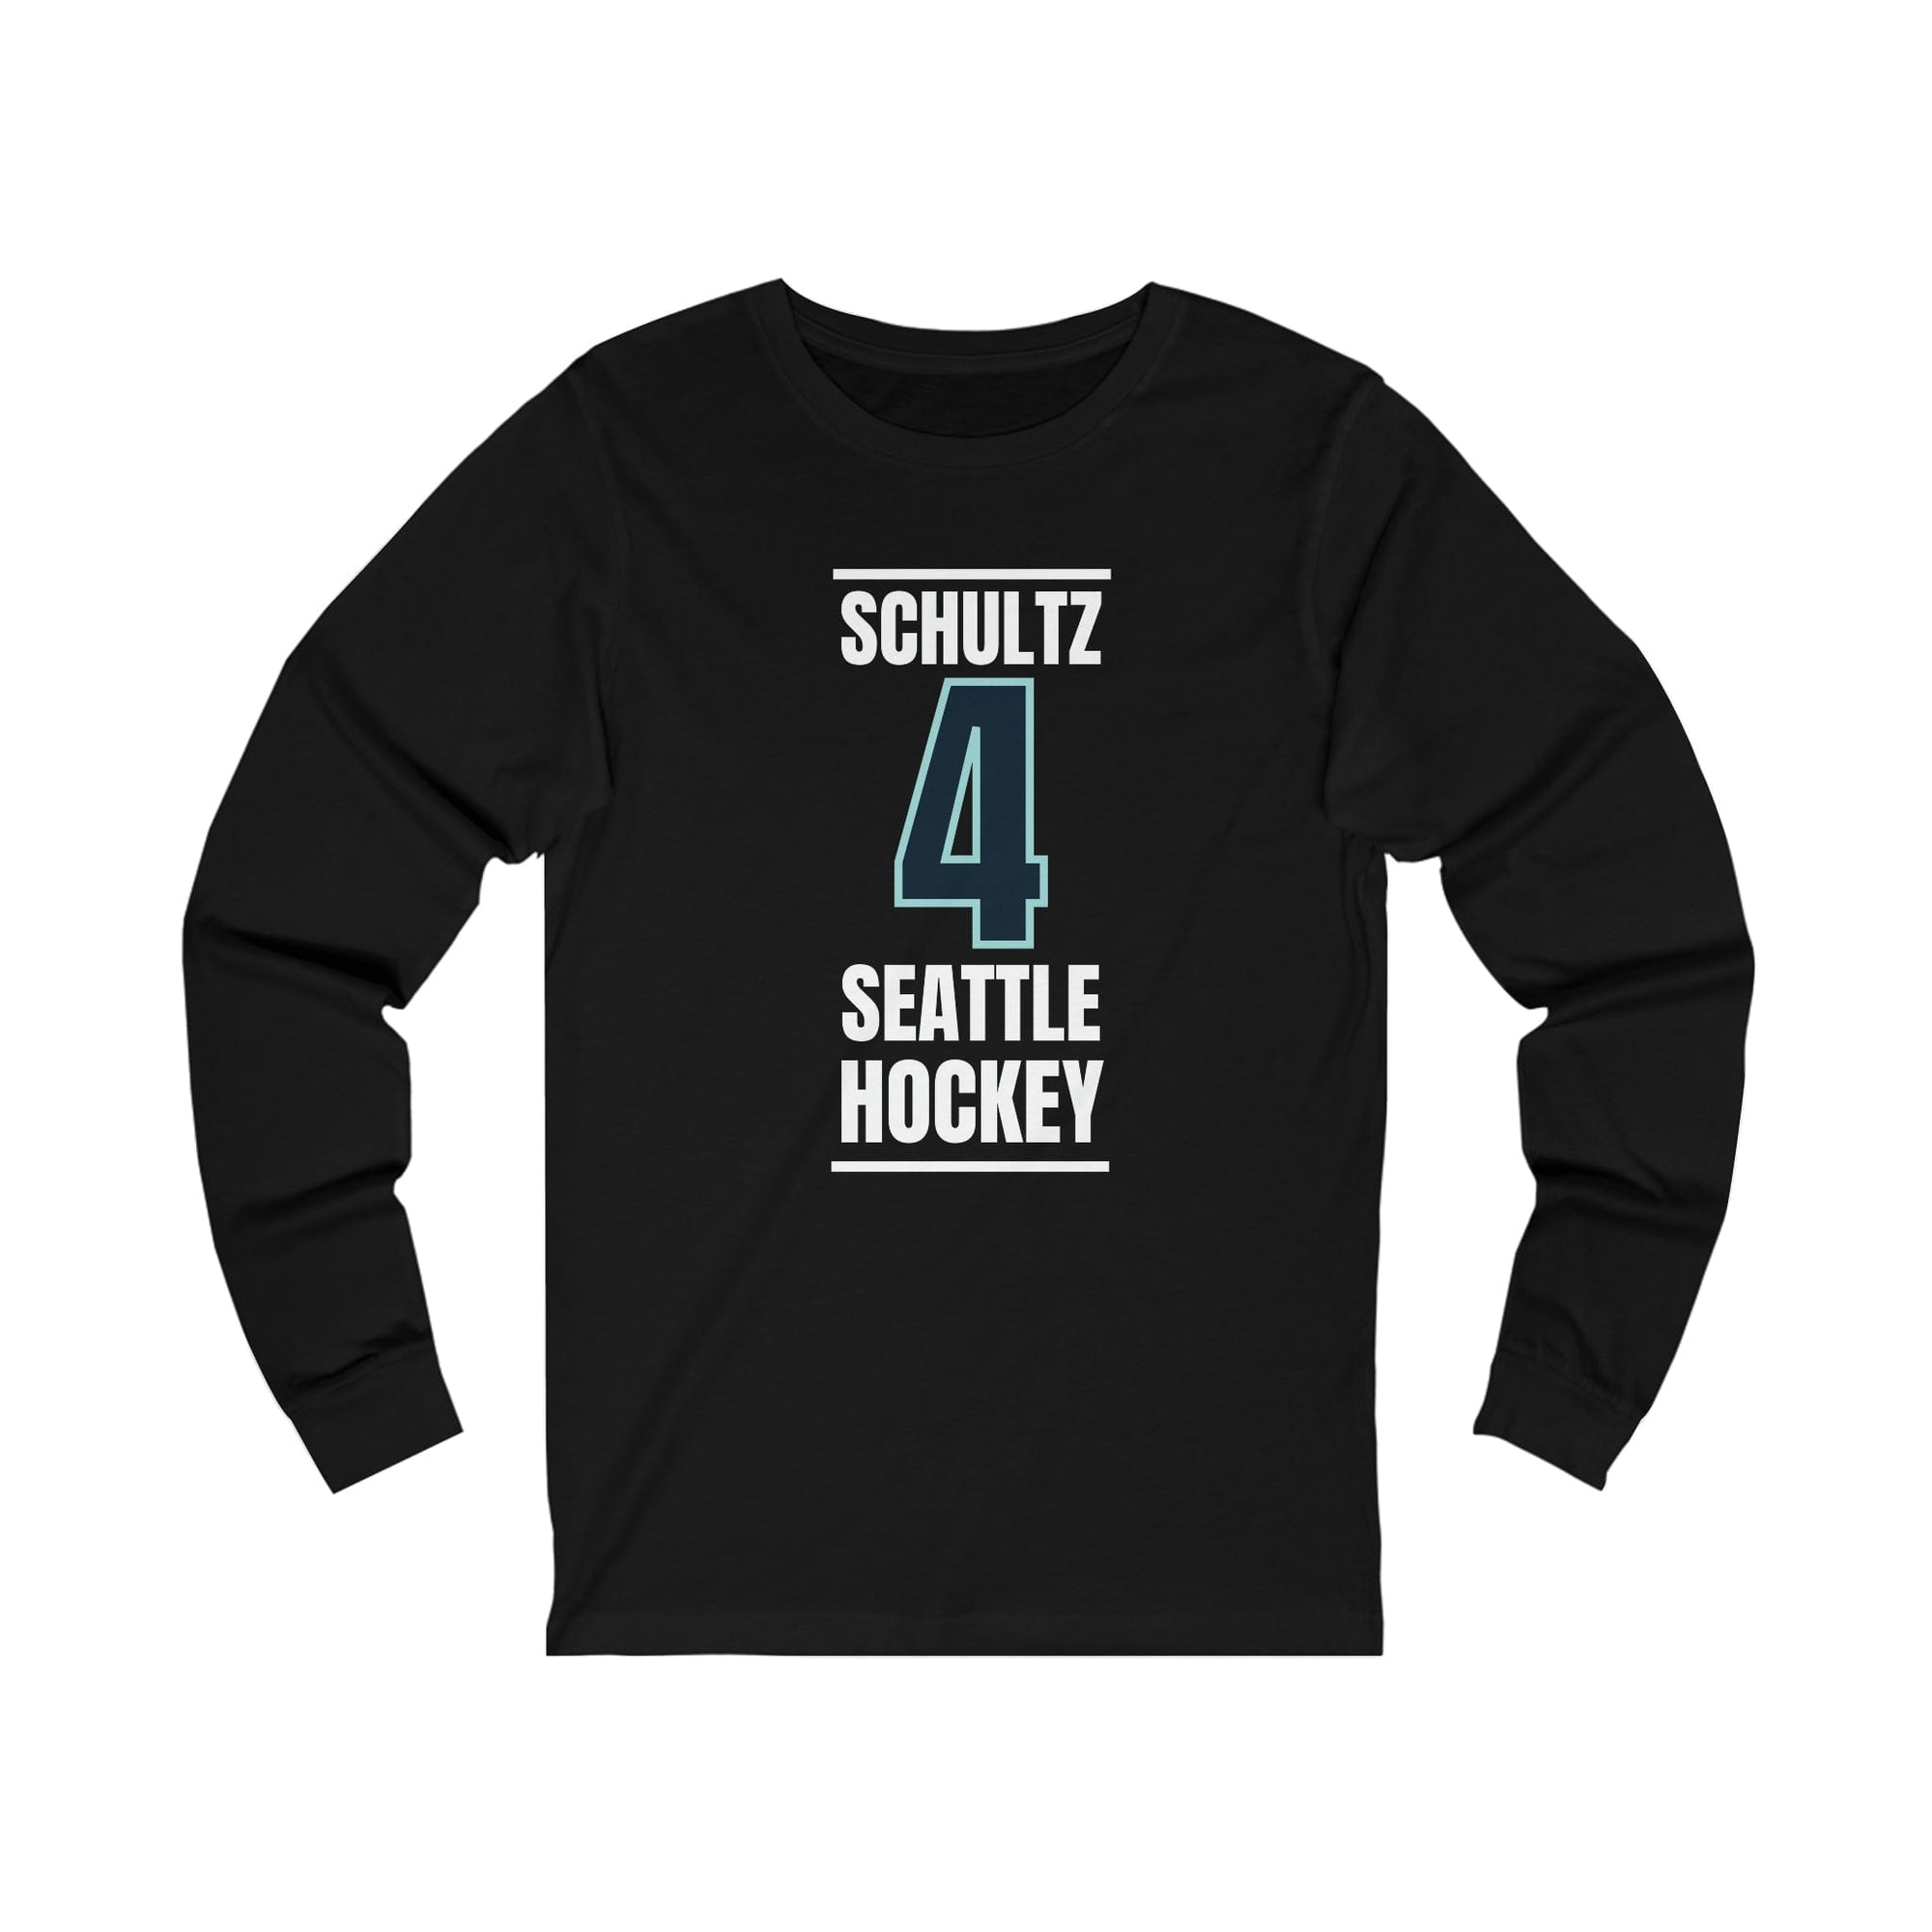 Long-sleeve Schultz 4 Seattle Hockey Black Vertical Design Unisex Jersey Long Sleeve Shirt